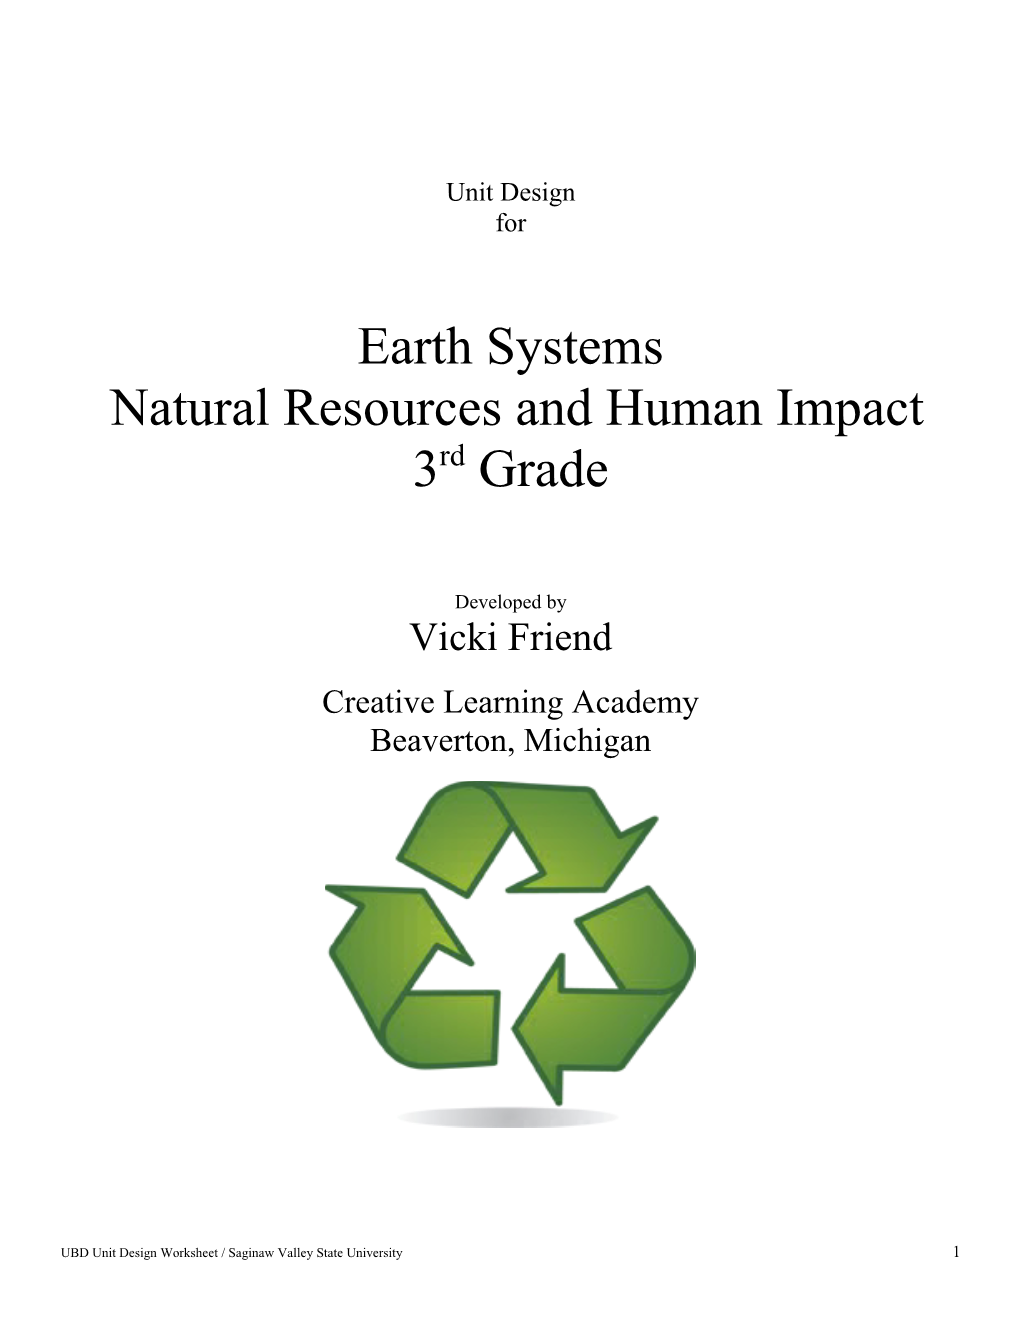 Natural Resources and Human Impact